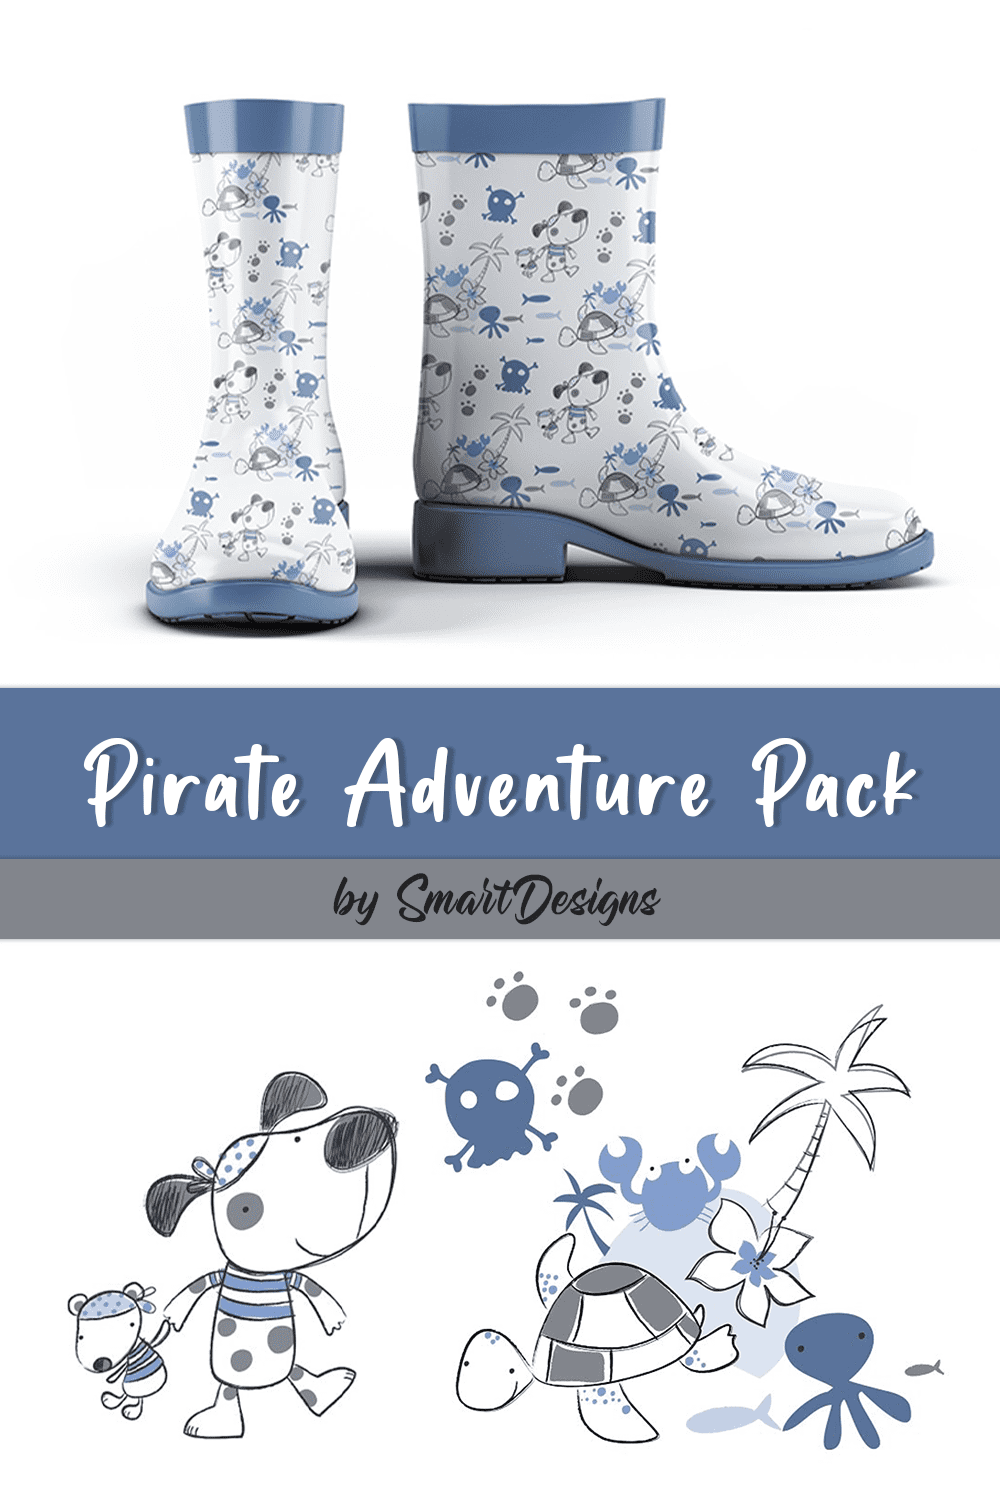 Pirate adventure pack of pinterest.